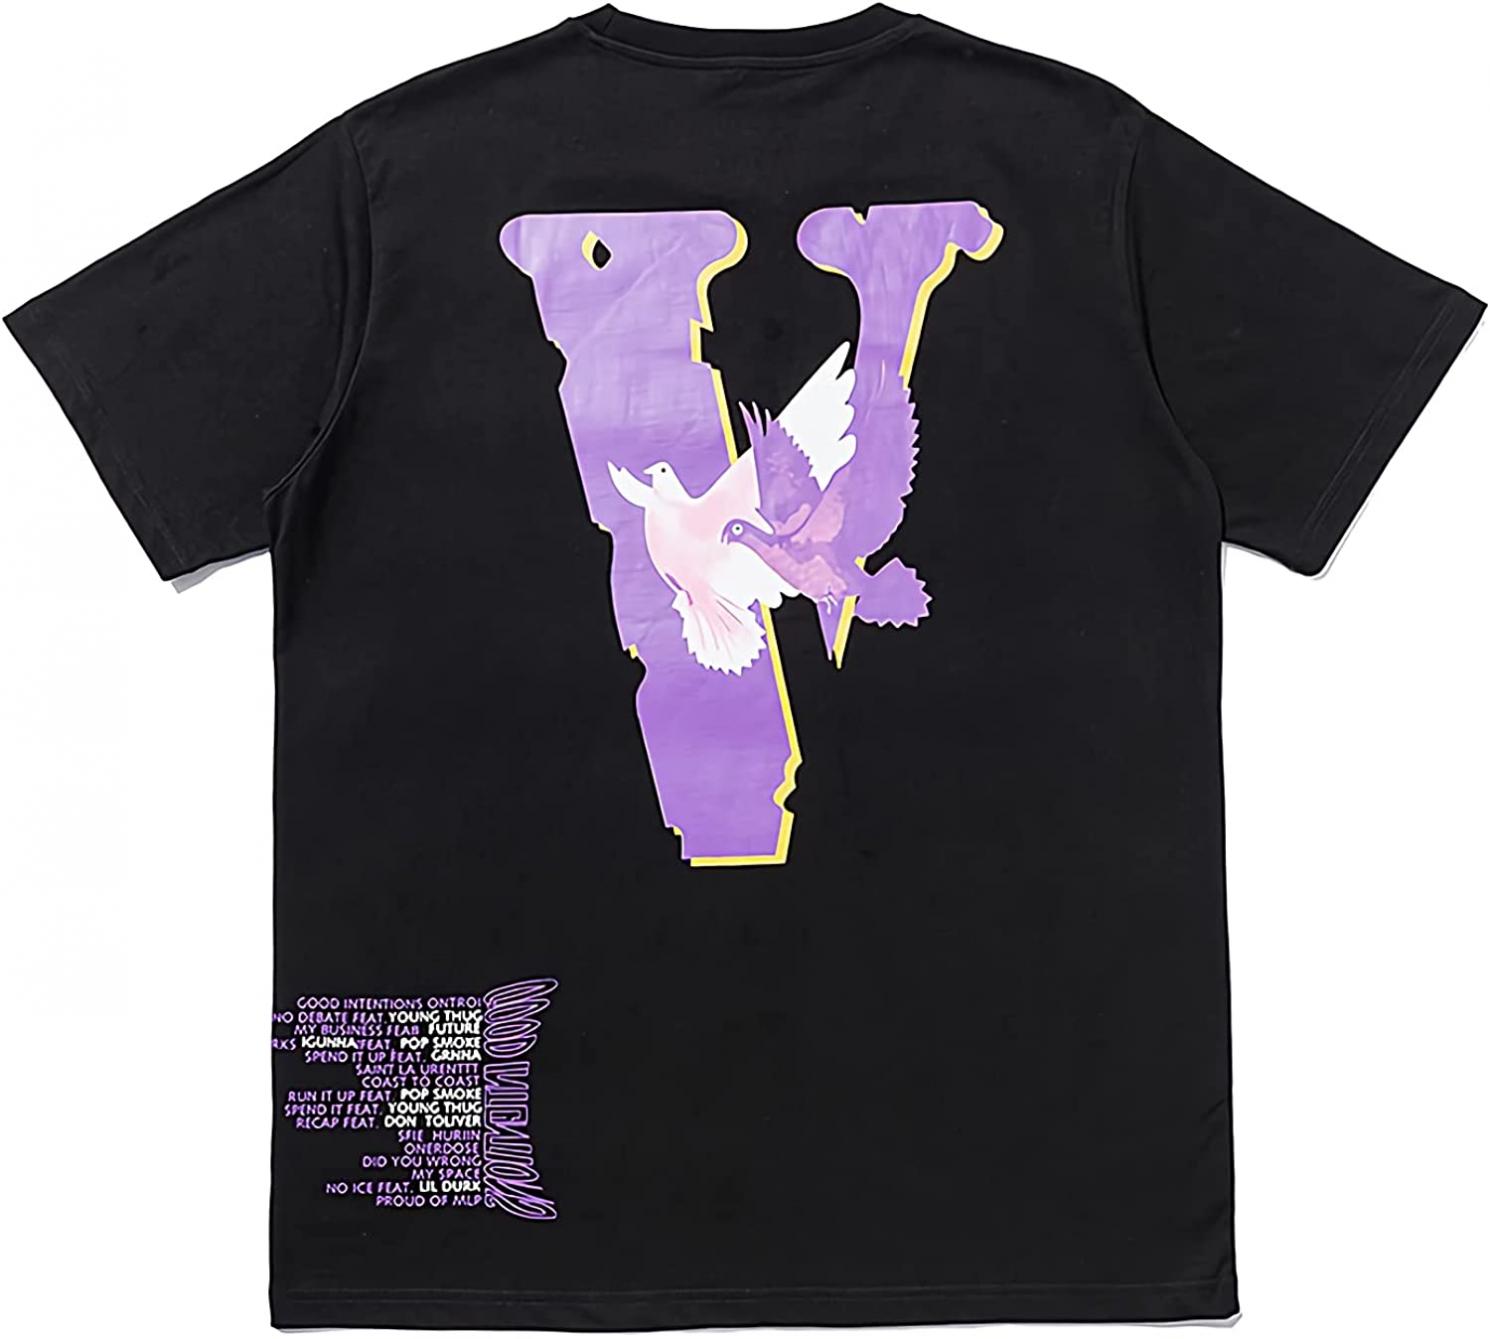 FEIXII Big V Letter Shirts Men's Graphic Print T Shirt Hip Hop Angel Wings Print Short Sleeve Tee